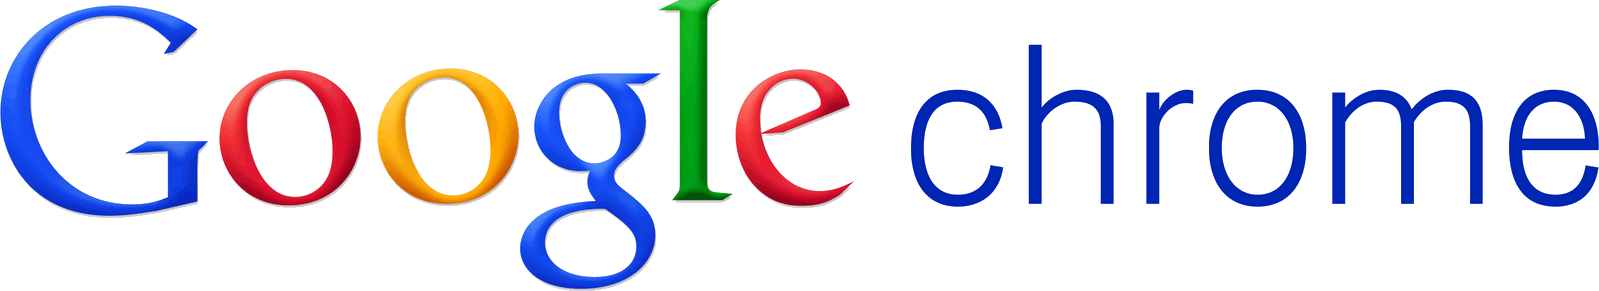 Original Google Chrome Logo - File:Google logo and Chrome wordmark.png - Wikimedia Commons